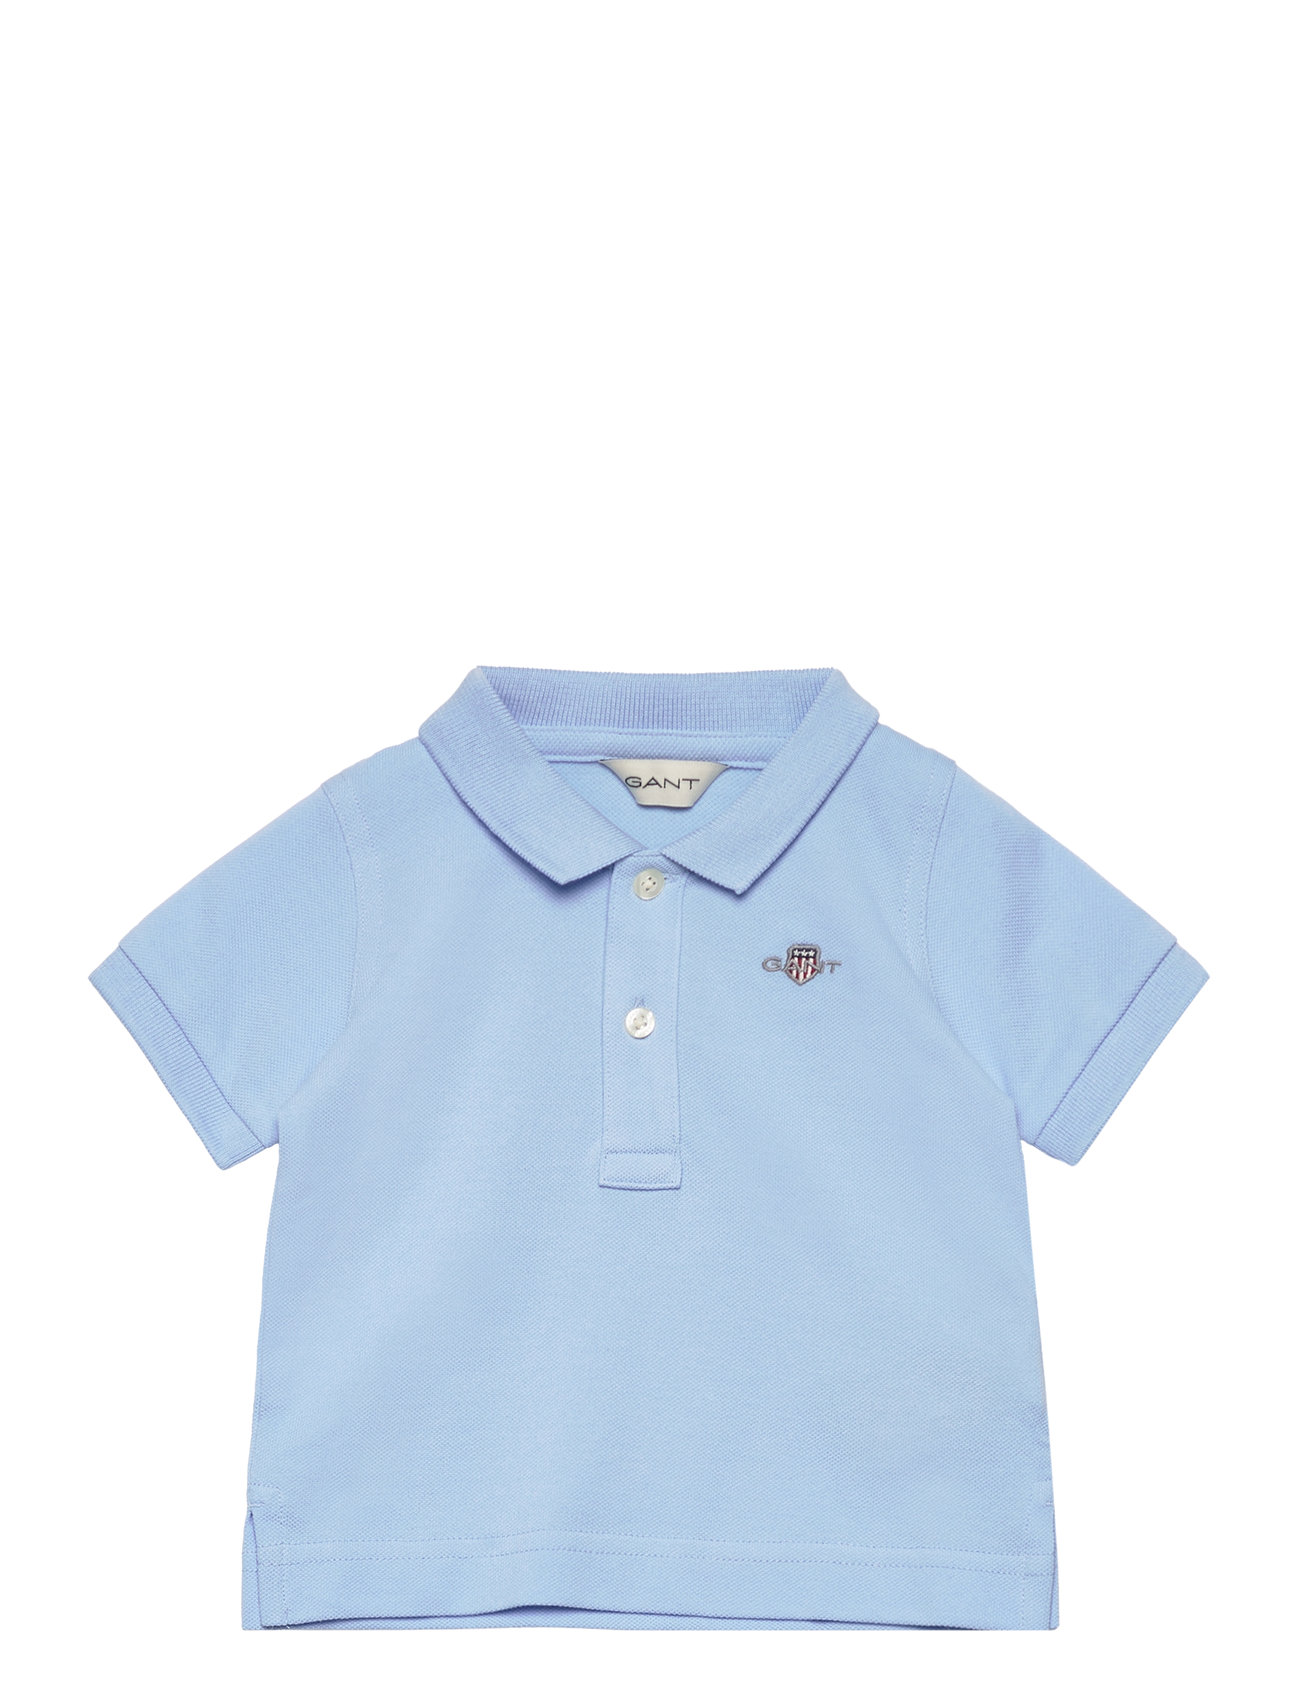 Shield Pique Ss Rugger Tops T-shirts Polo Shirts Short-sleeved Polo Shirts Blue GANT